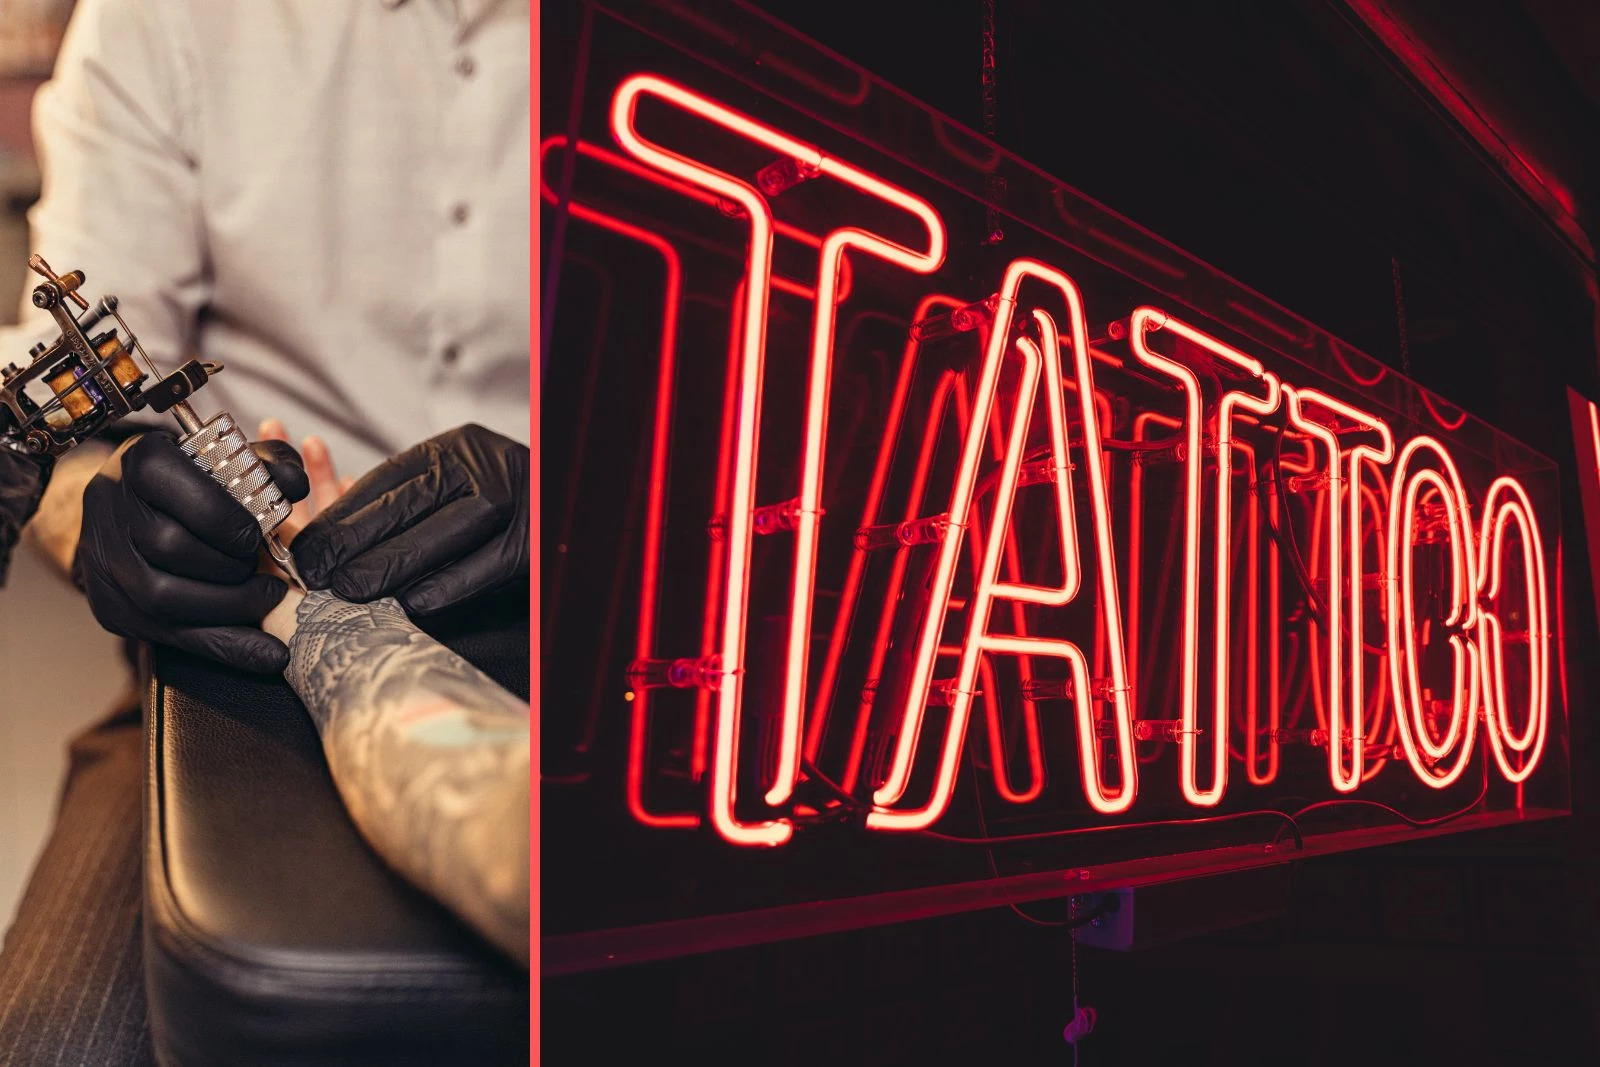 Best Tattoo Prices in Las Vegas - BEST OF LAS VEGAS TATTOO